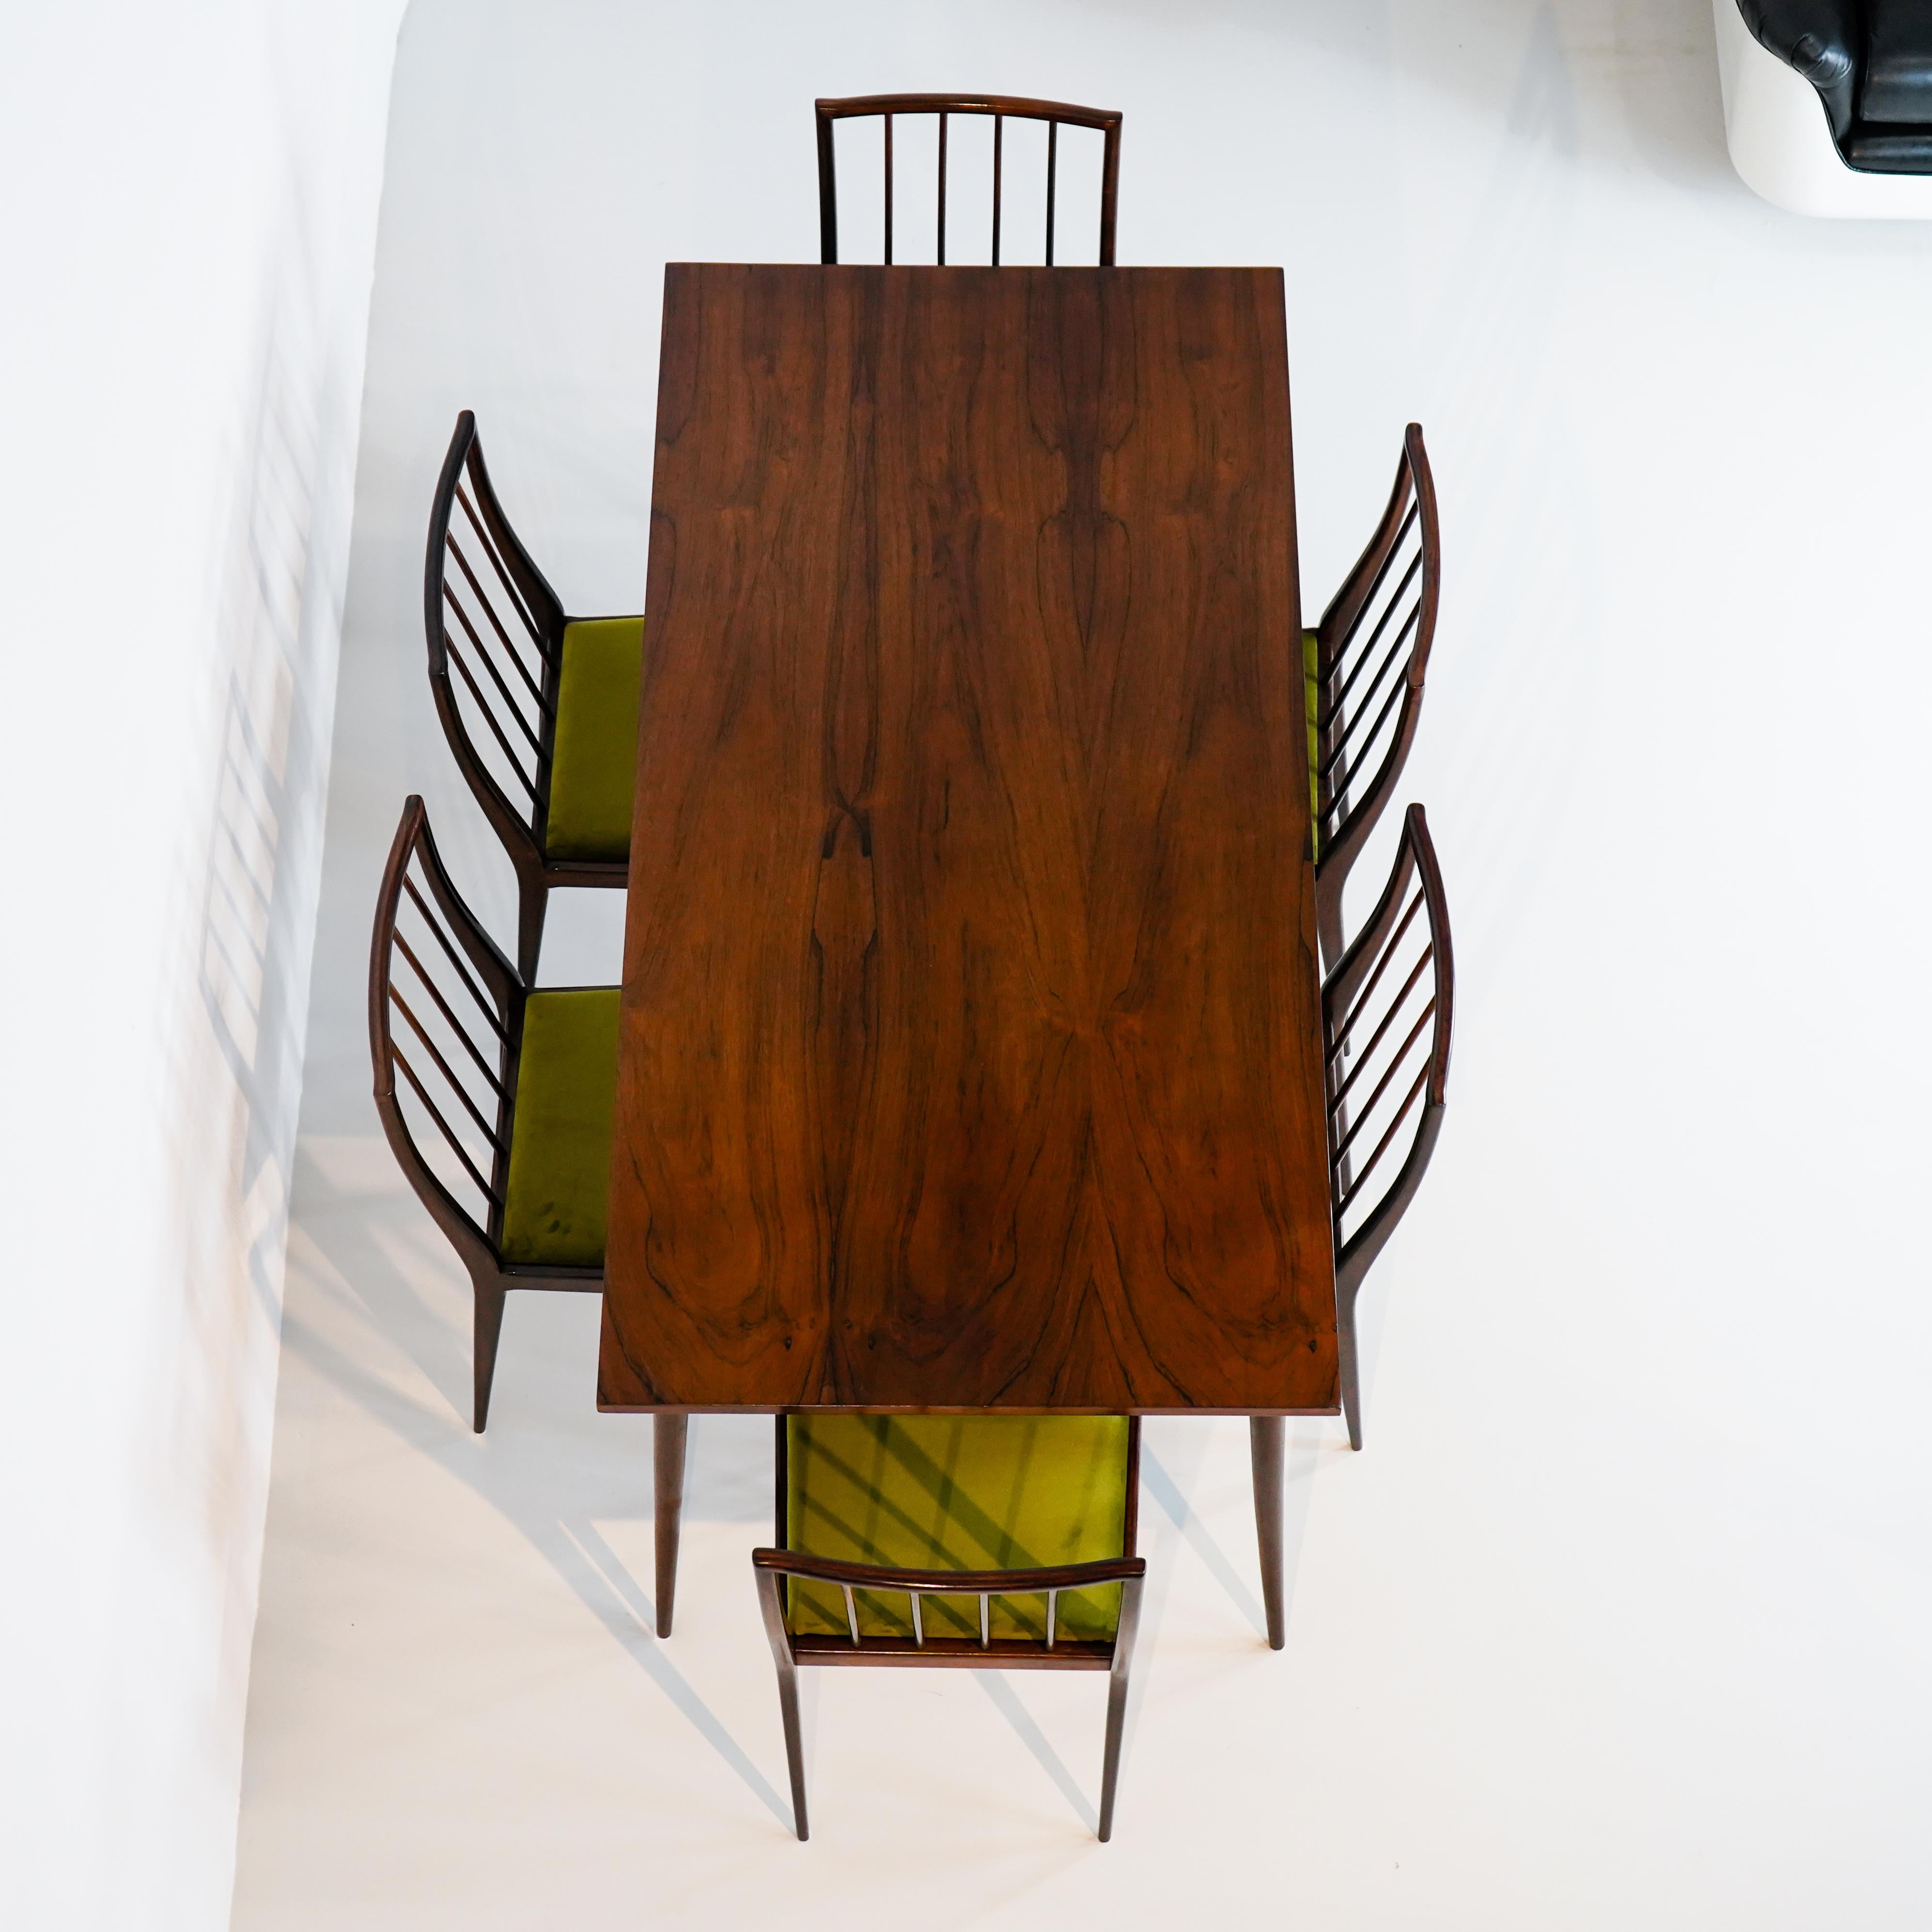 GB01 RIPAS - 6 chaises et table scellée en bois de rose, Geraldo de Barro Unilabor en vente 4